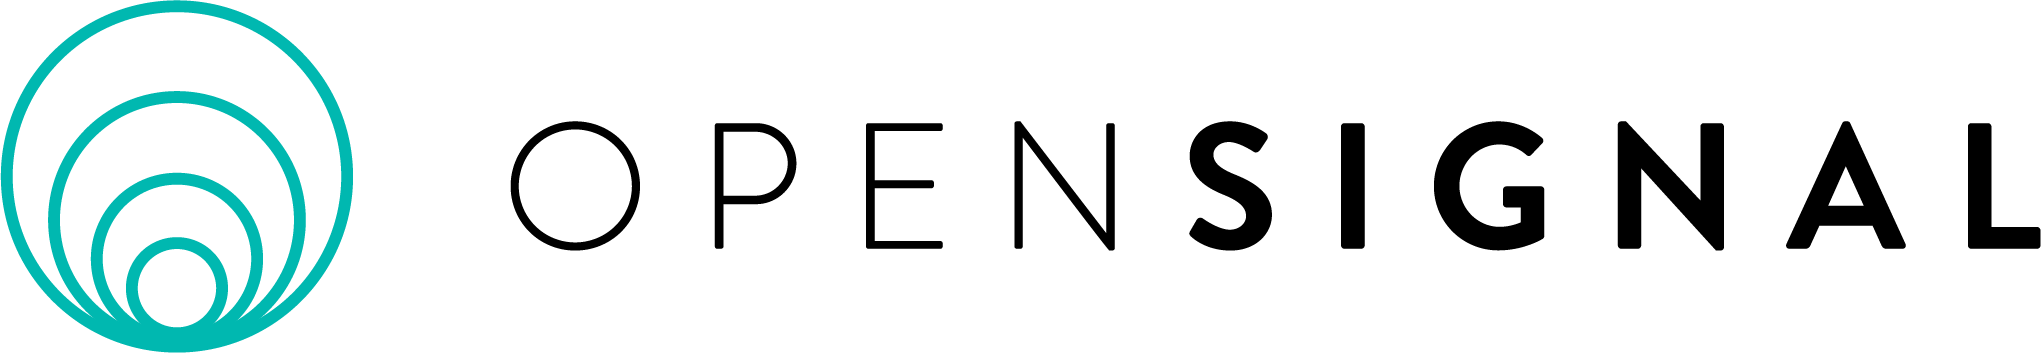 Opensignal_Horizontal_logo